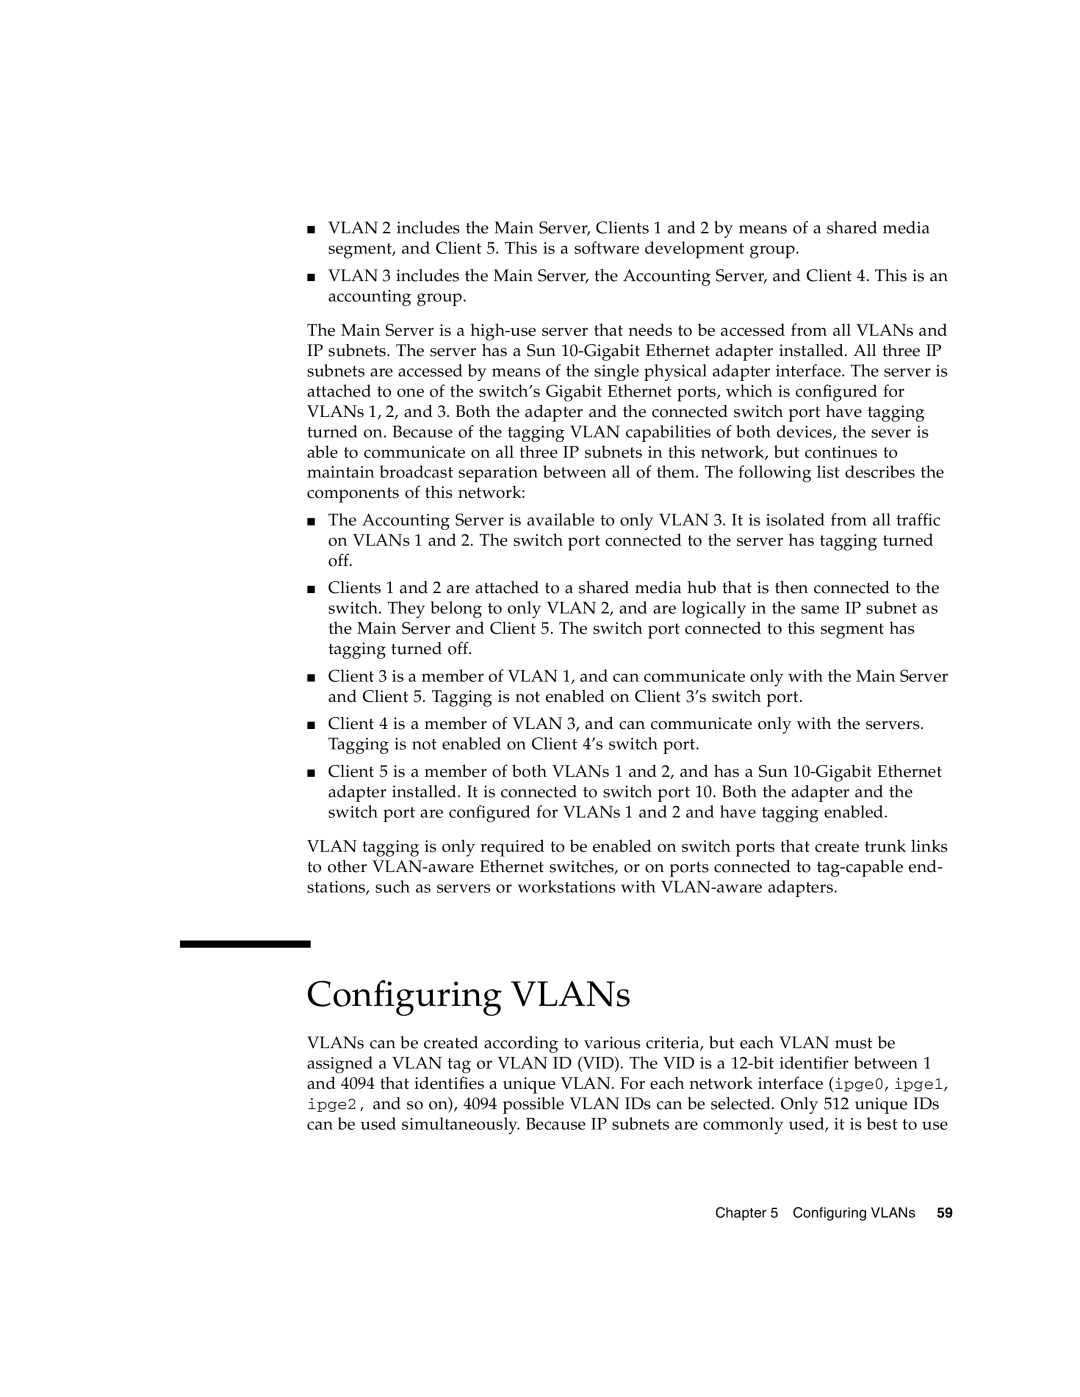 Sun Microsystems Gigabit Ethernet MMF/UTP Adapter manual Configuring VLANs 